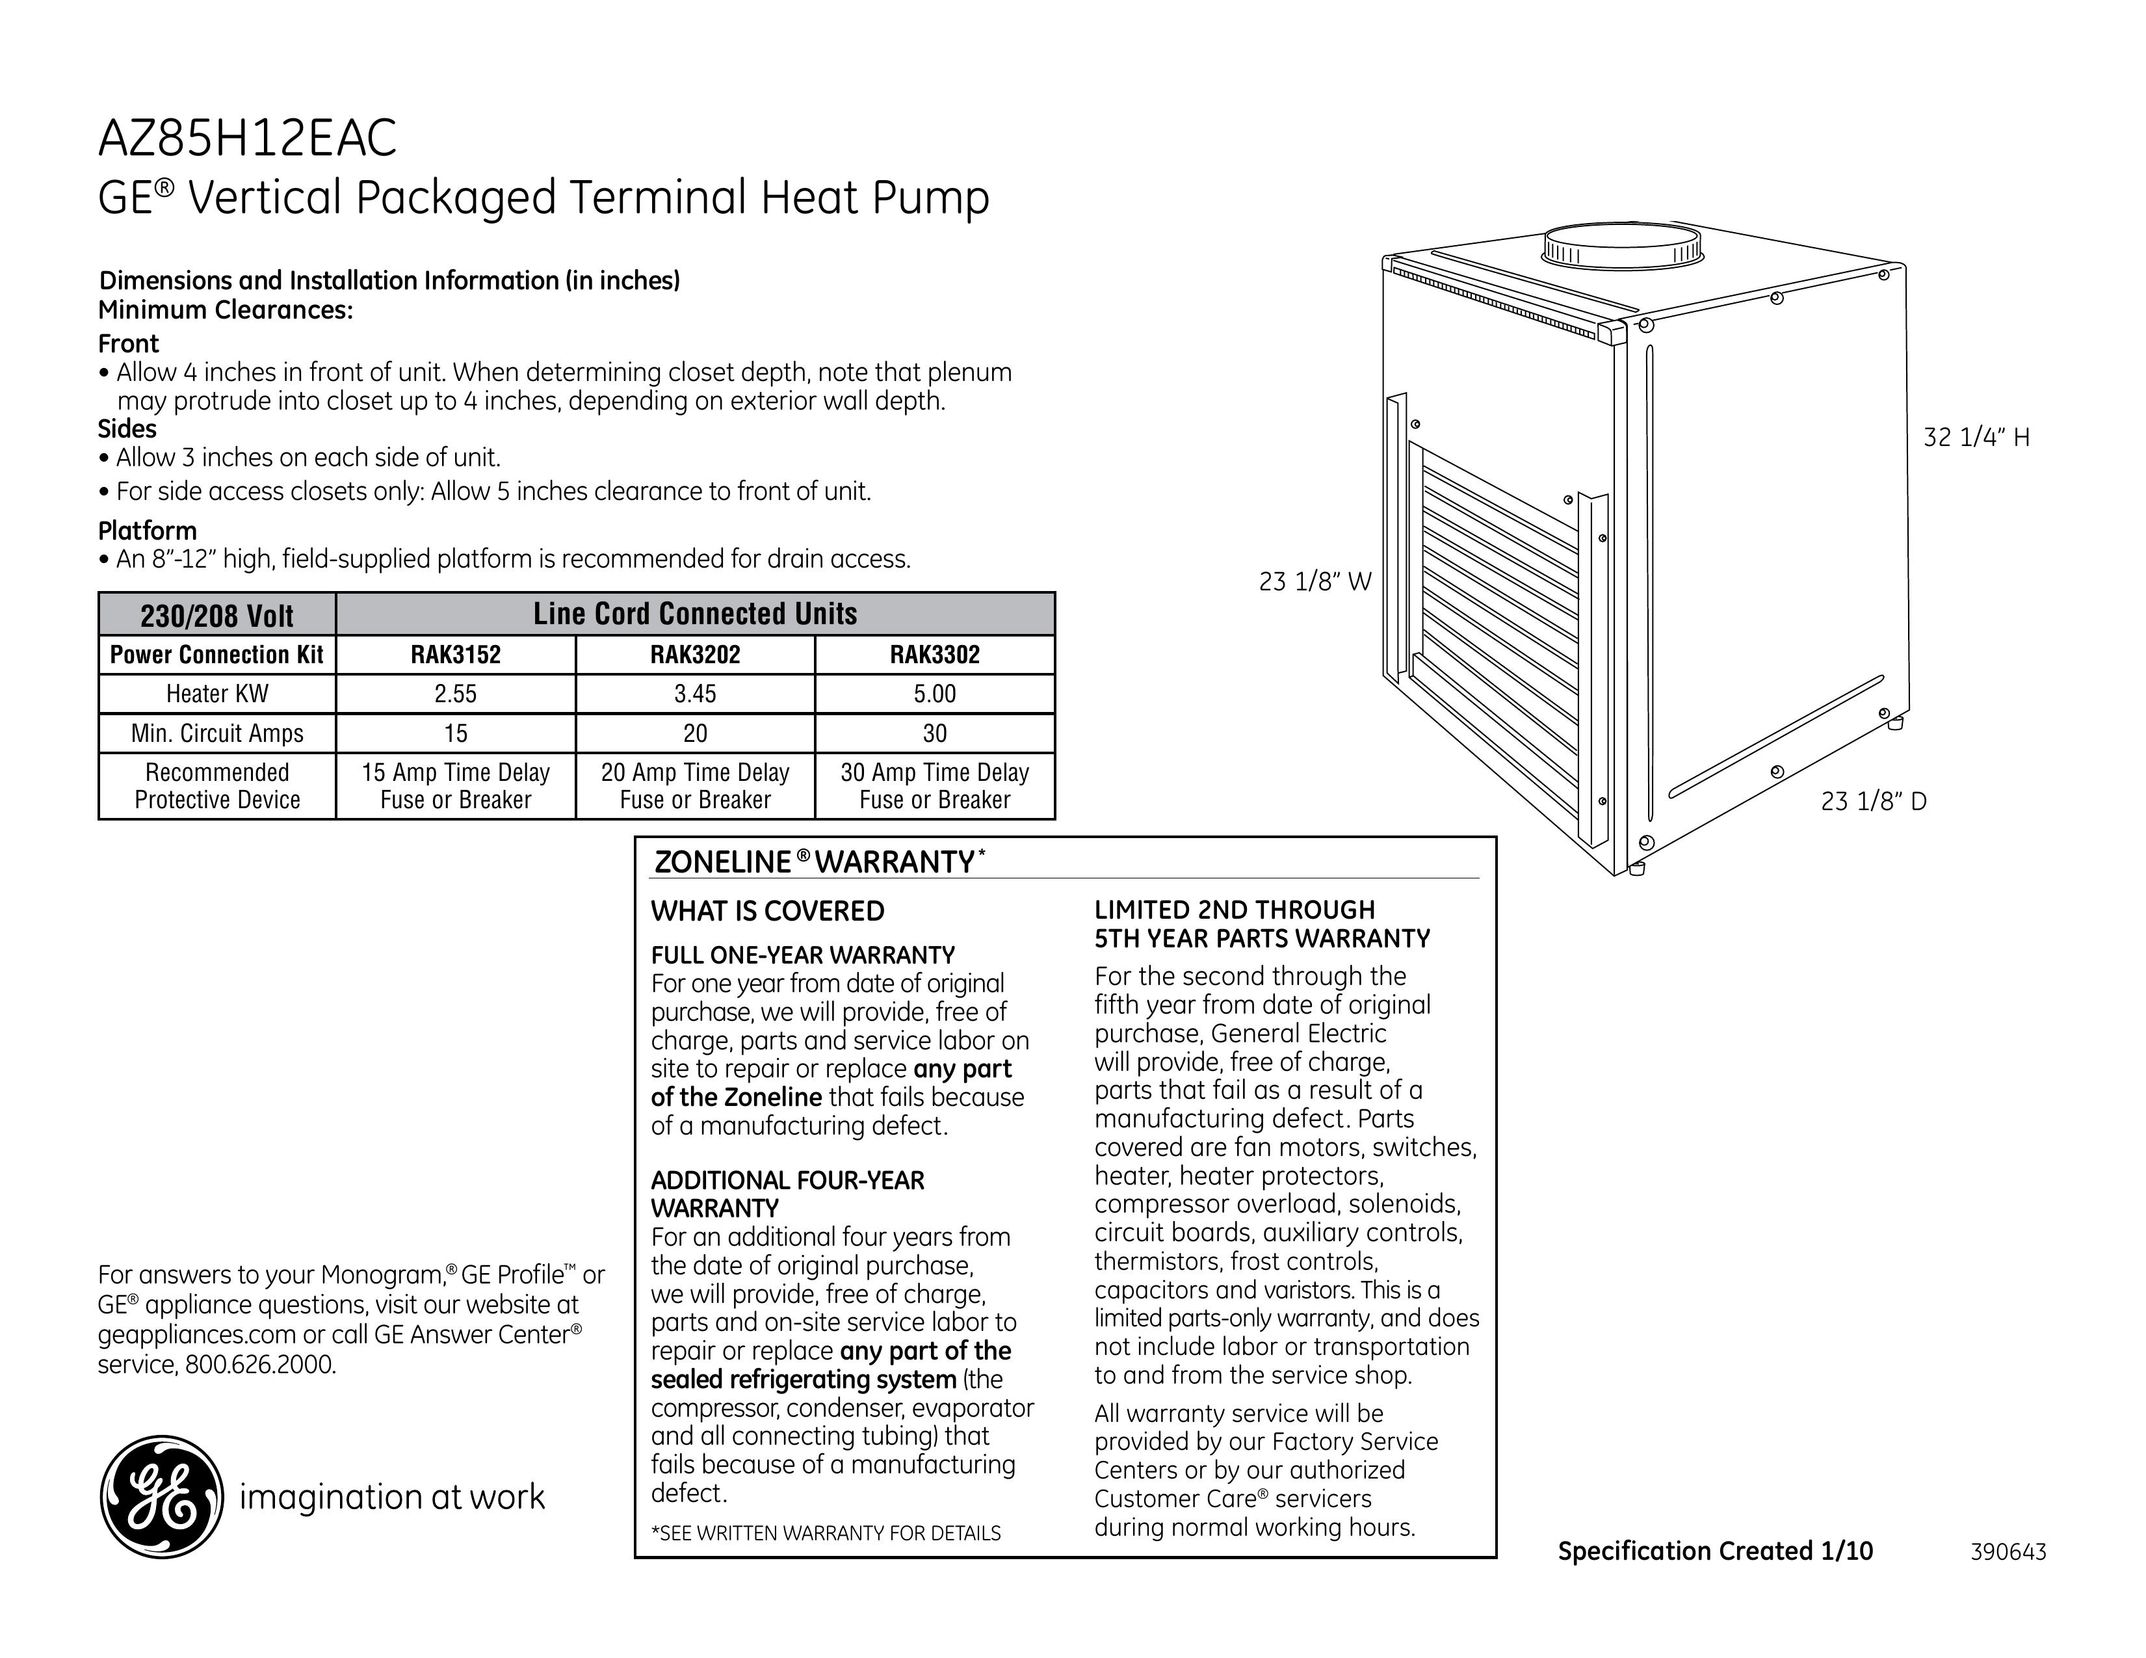 GE AZ85H12EAC Heat Pump User Manual